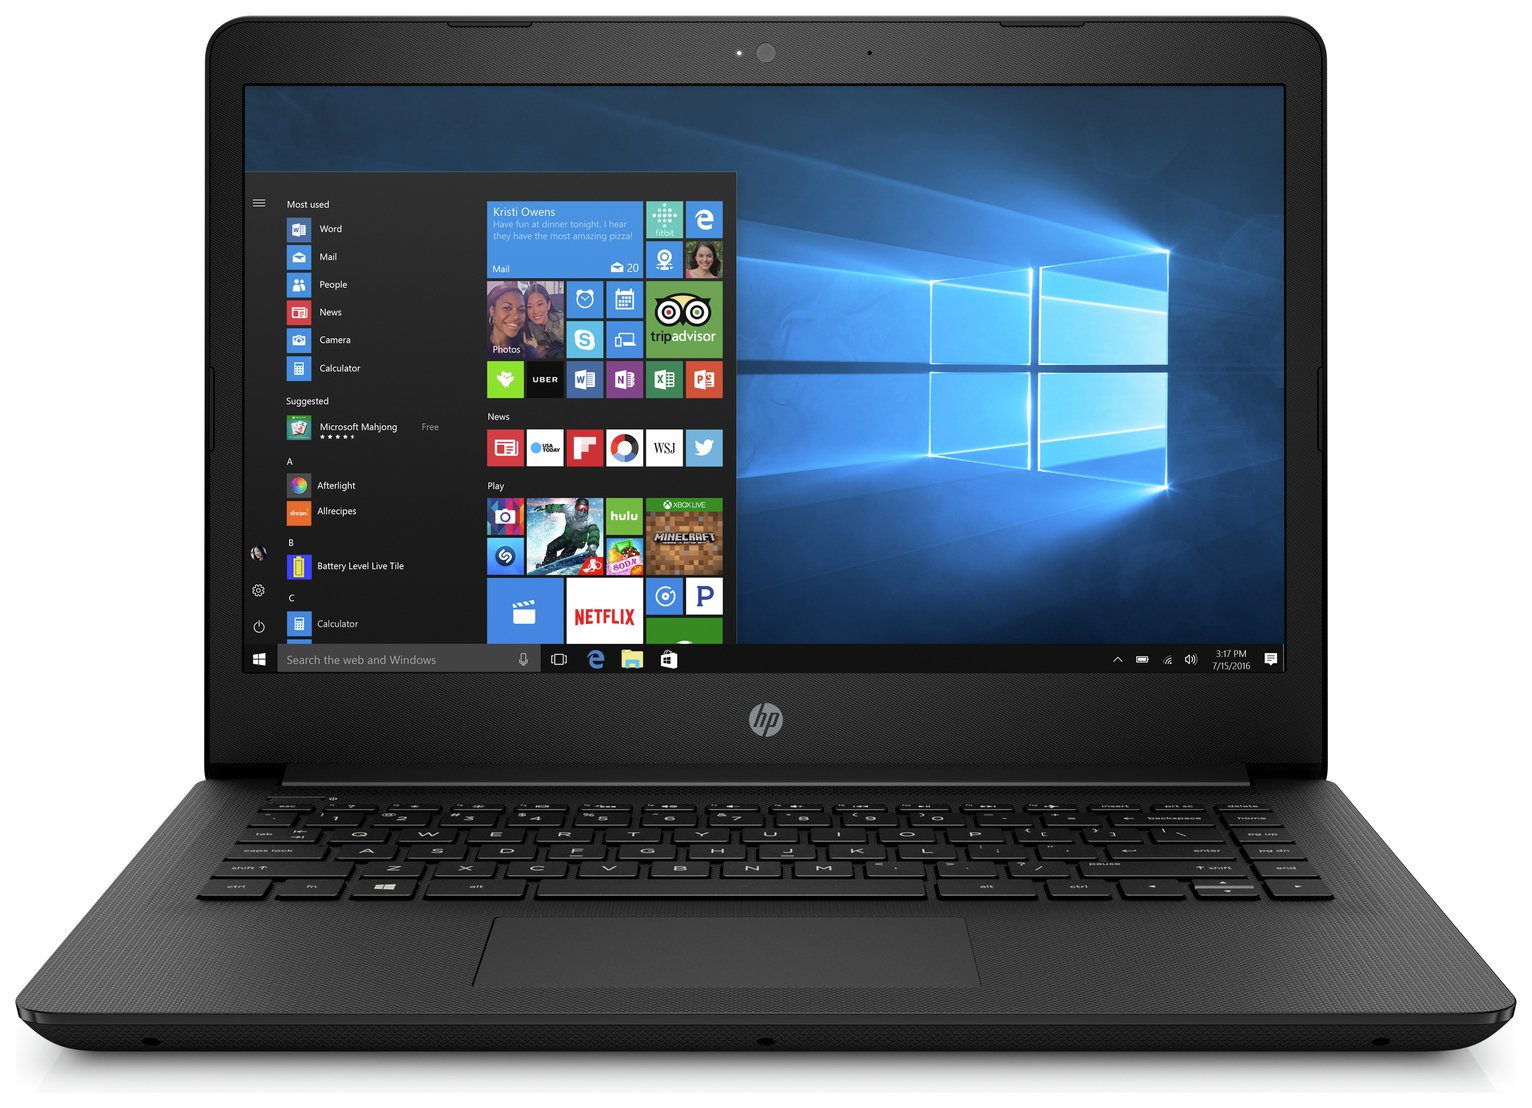 HP 14 Inch i5 4GB 128GB Laptop - Black Review thumbnail